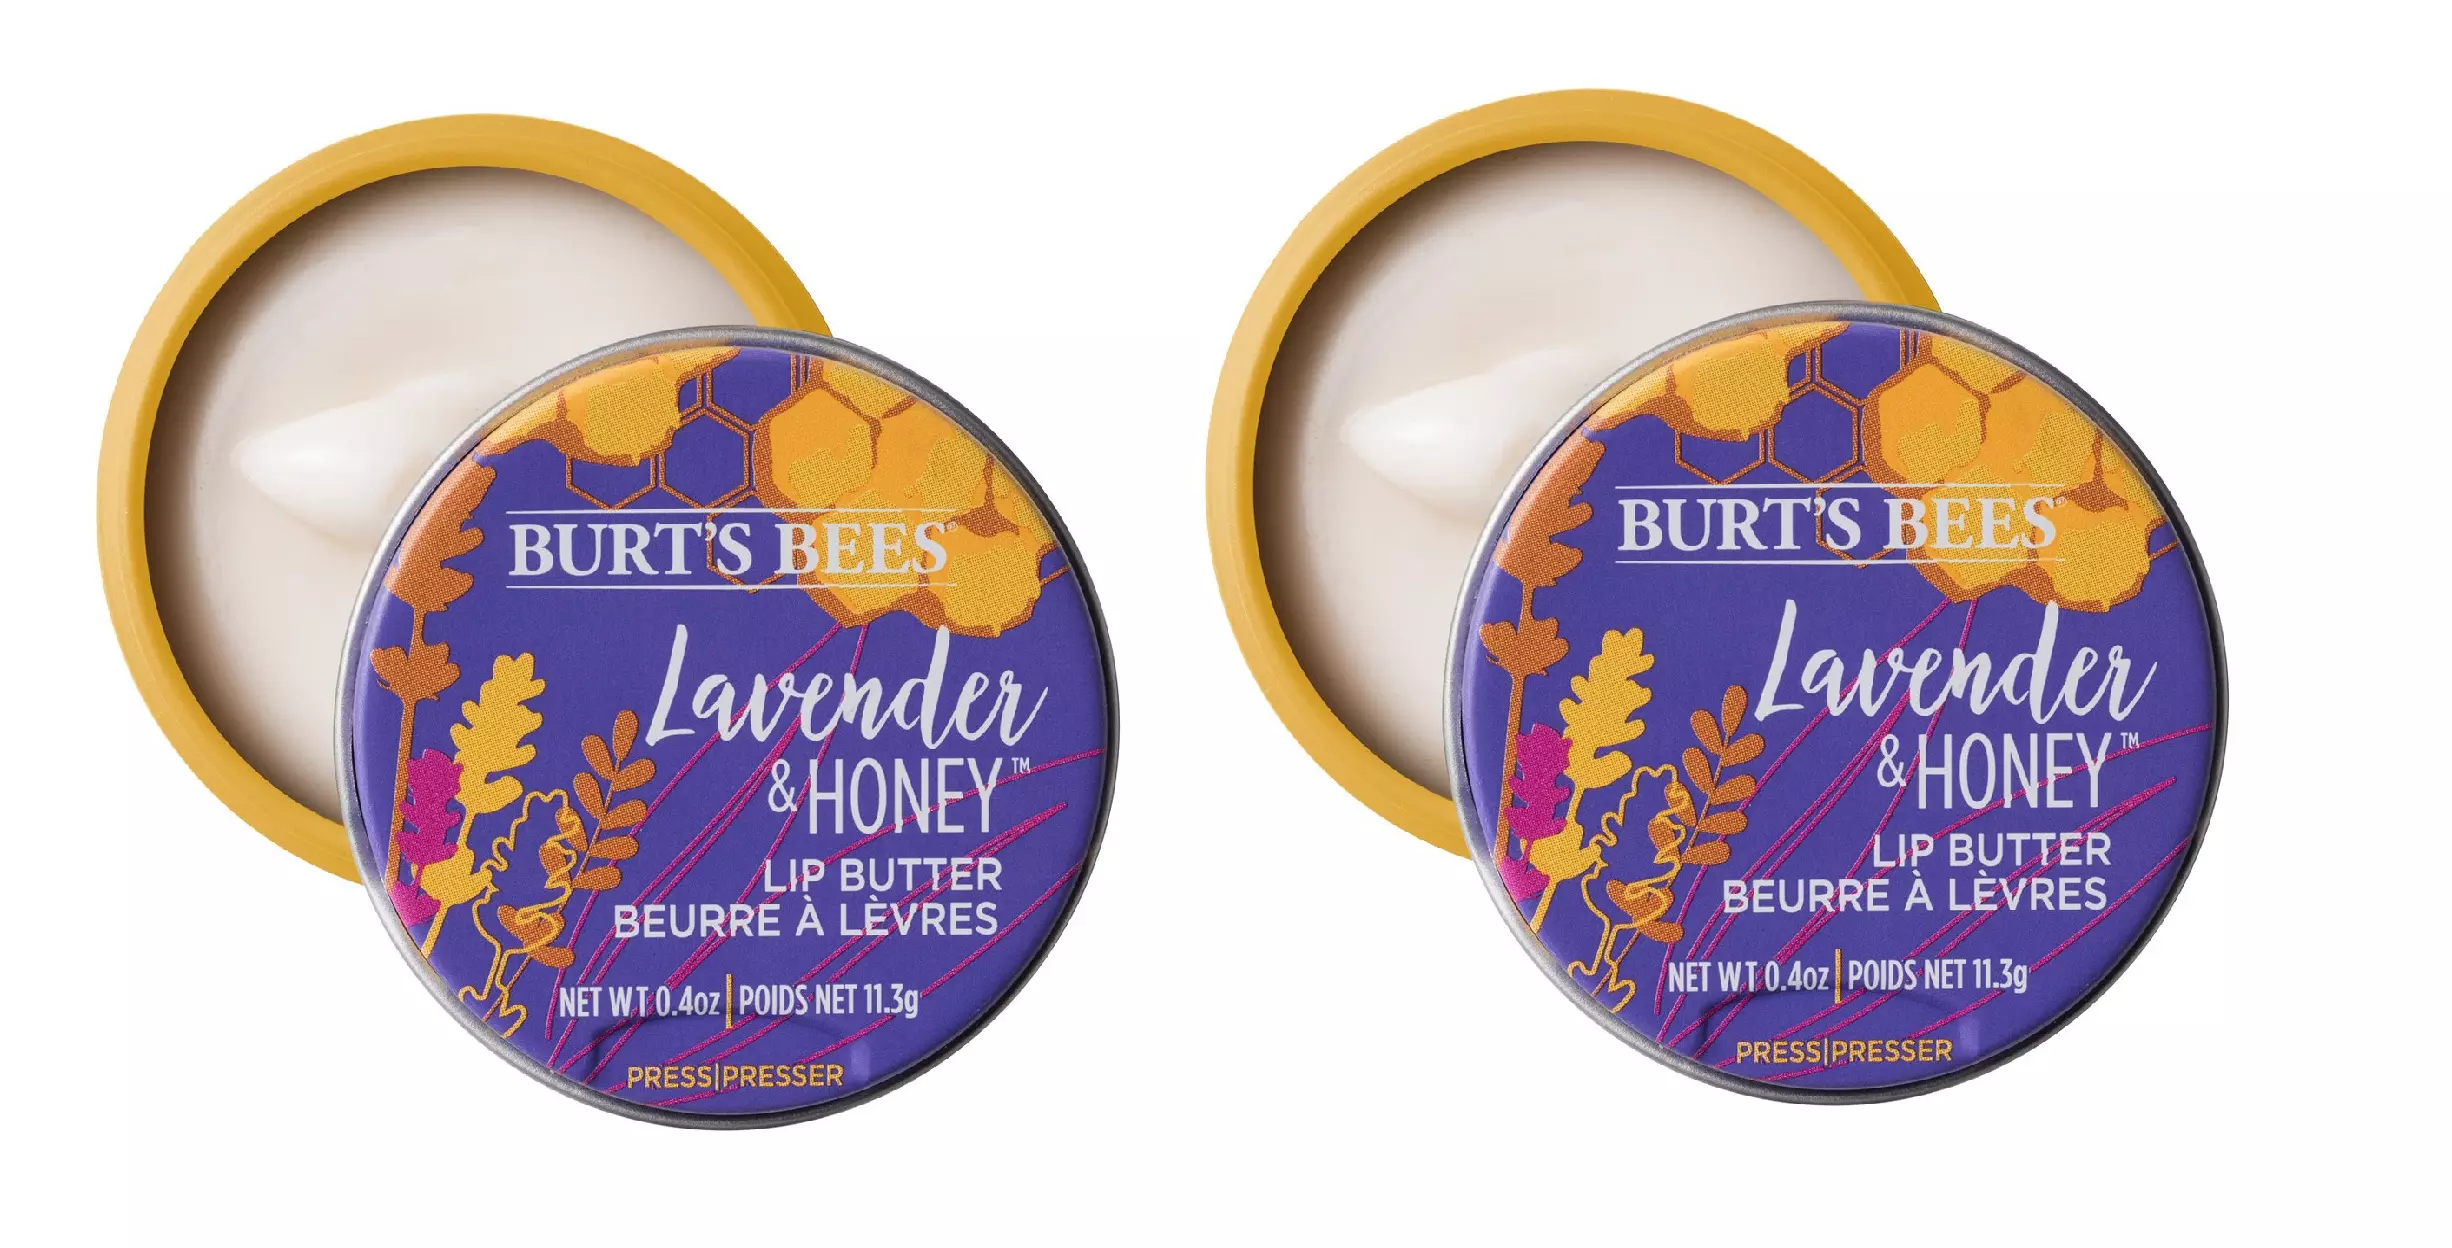 Burts Bees Lip Butter Lavenderhoney -Pack